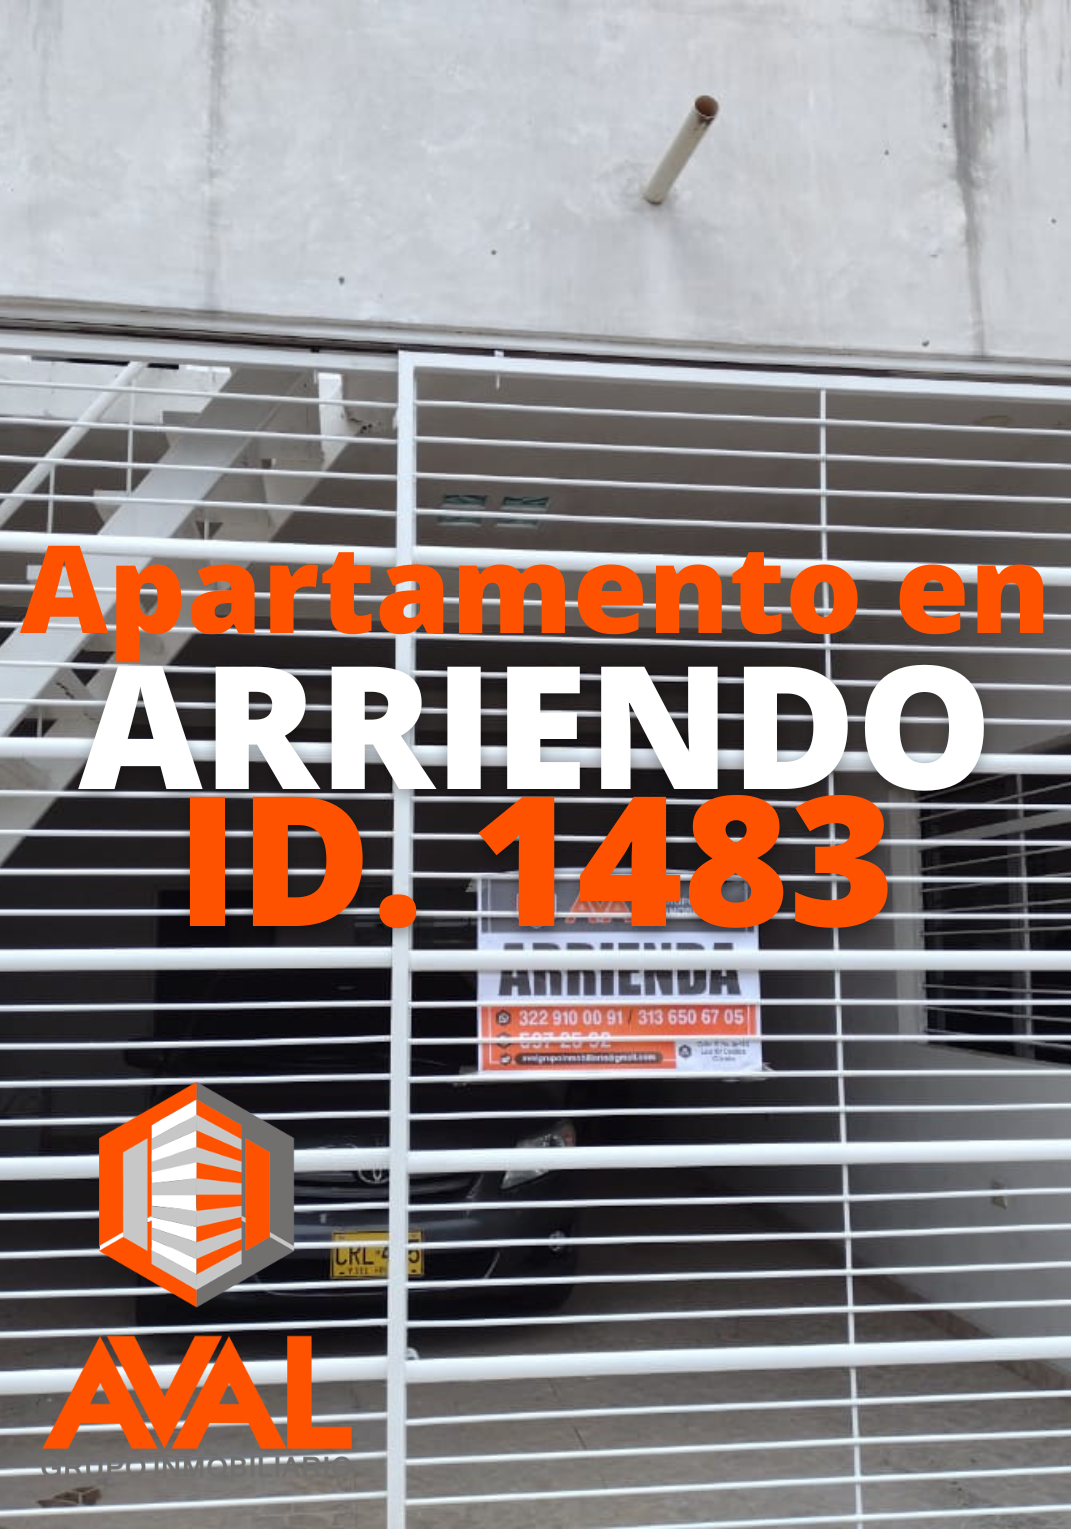 APARTAMENTO EN ARRIENDO, CÚCUTA – 1483